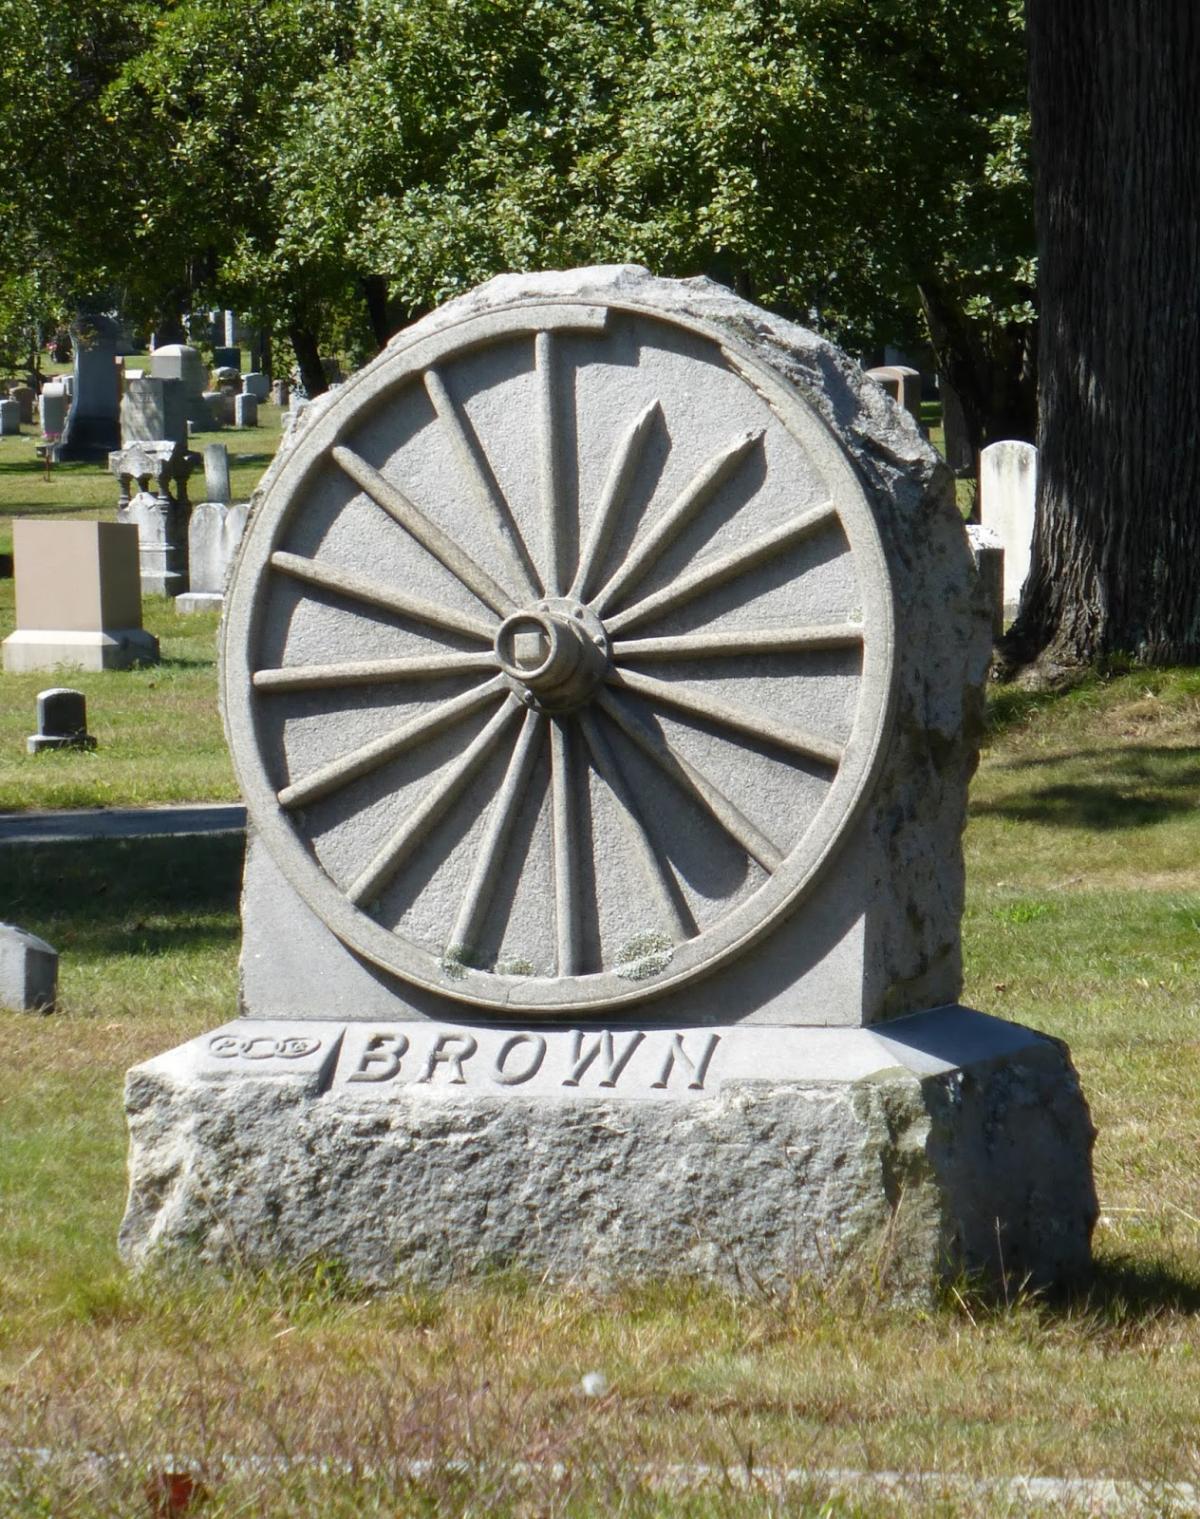 OK, Grove, Headstone Symbols and Meanings, Wheel, Broken